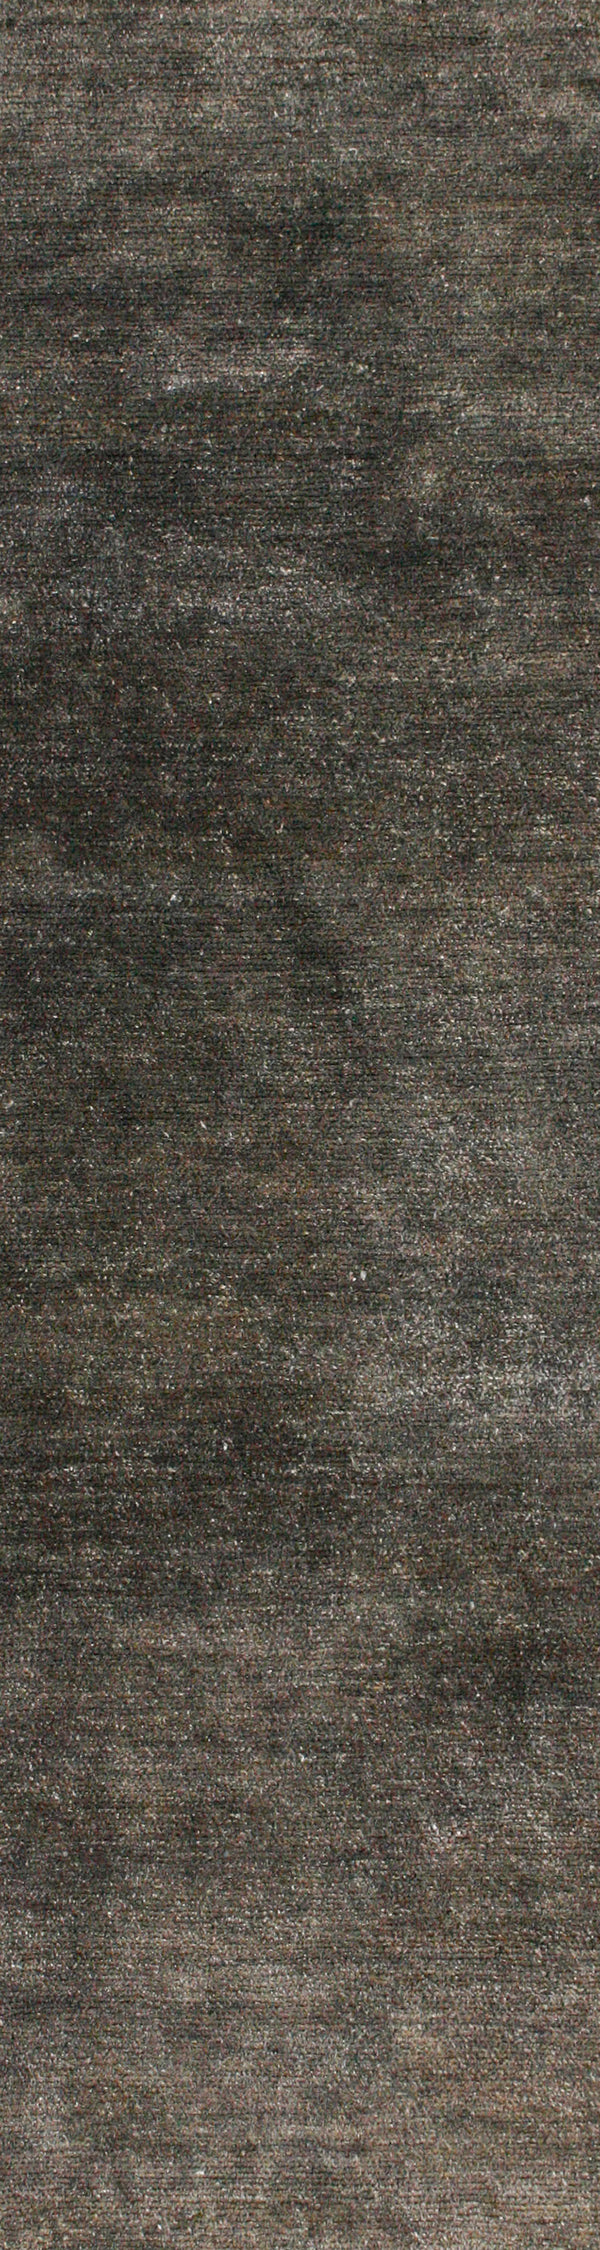 BAYA Anchorage Floor Rug - Gravel - Runner